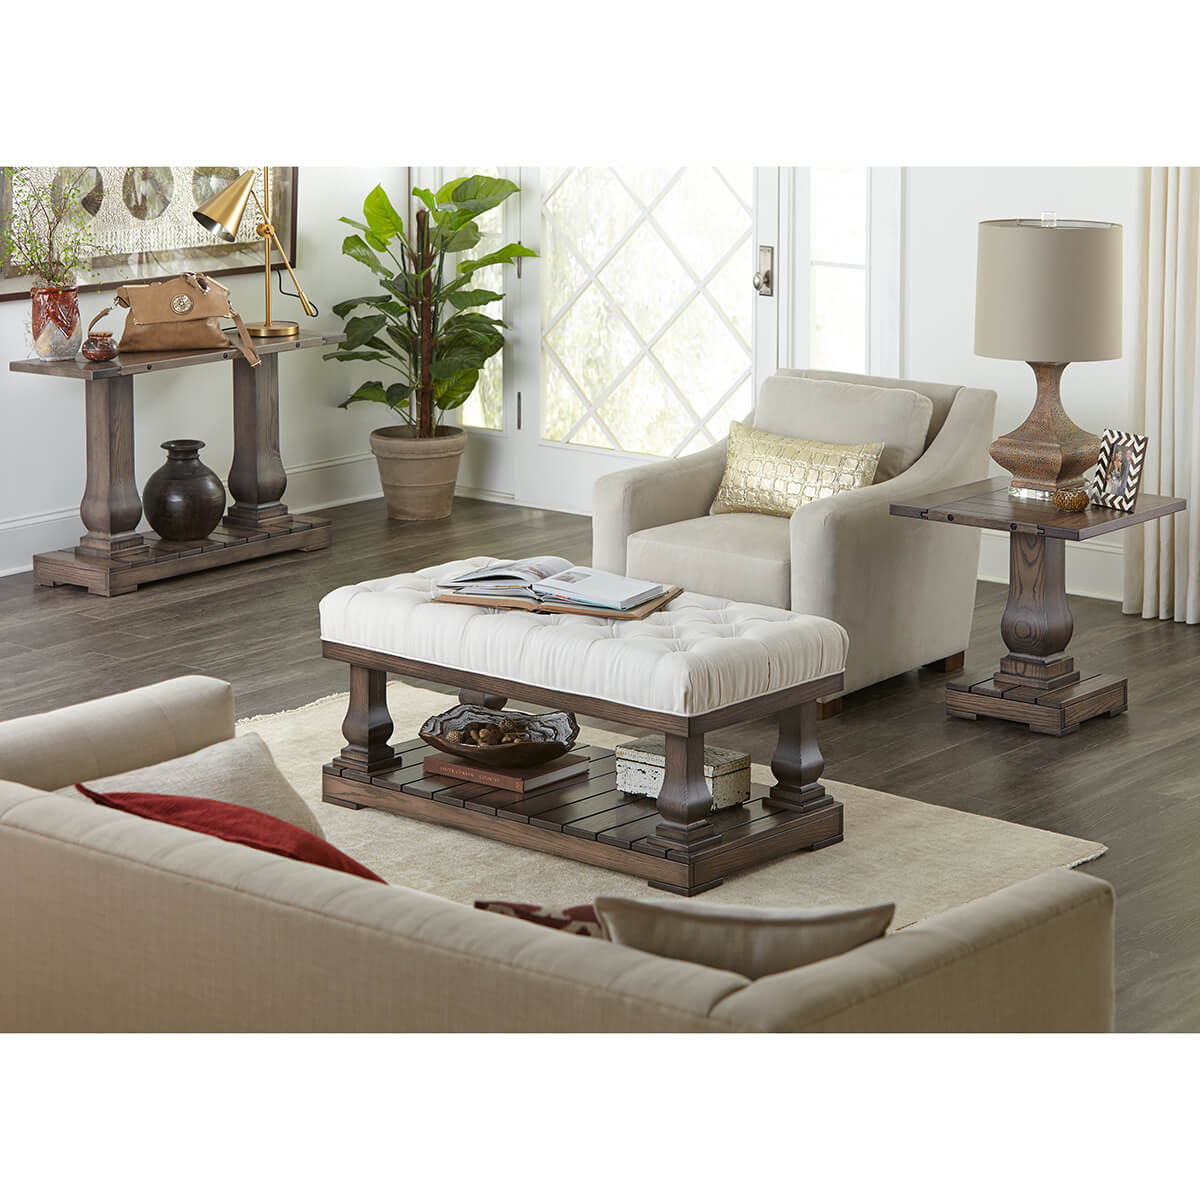 Living Room Furniture Amish Hills, Juniper Dell Round Lamp Tables